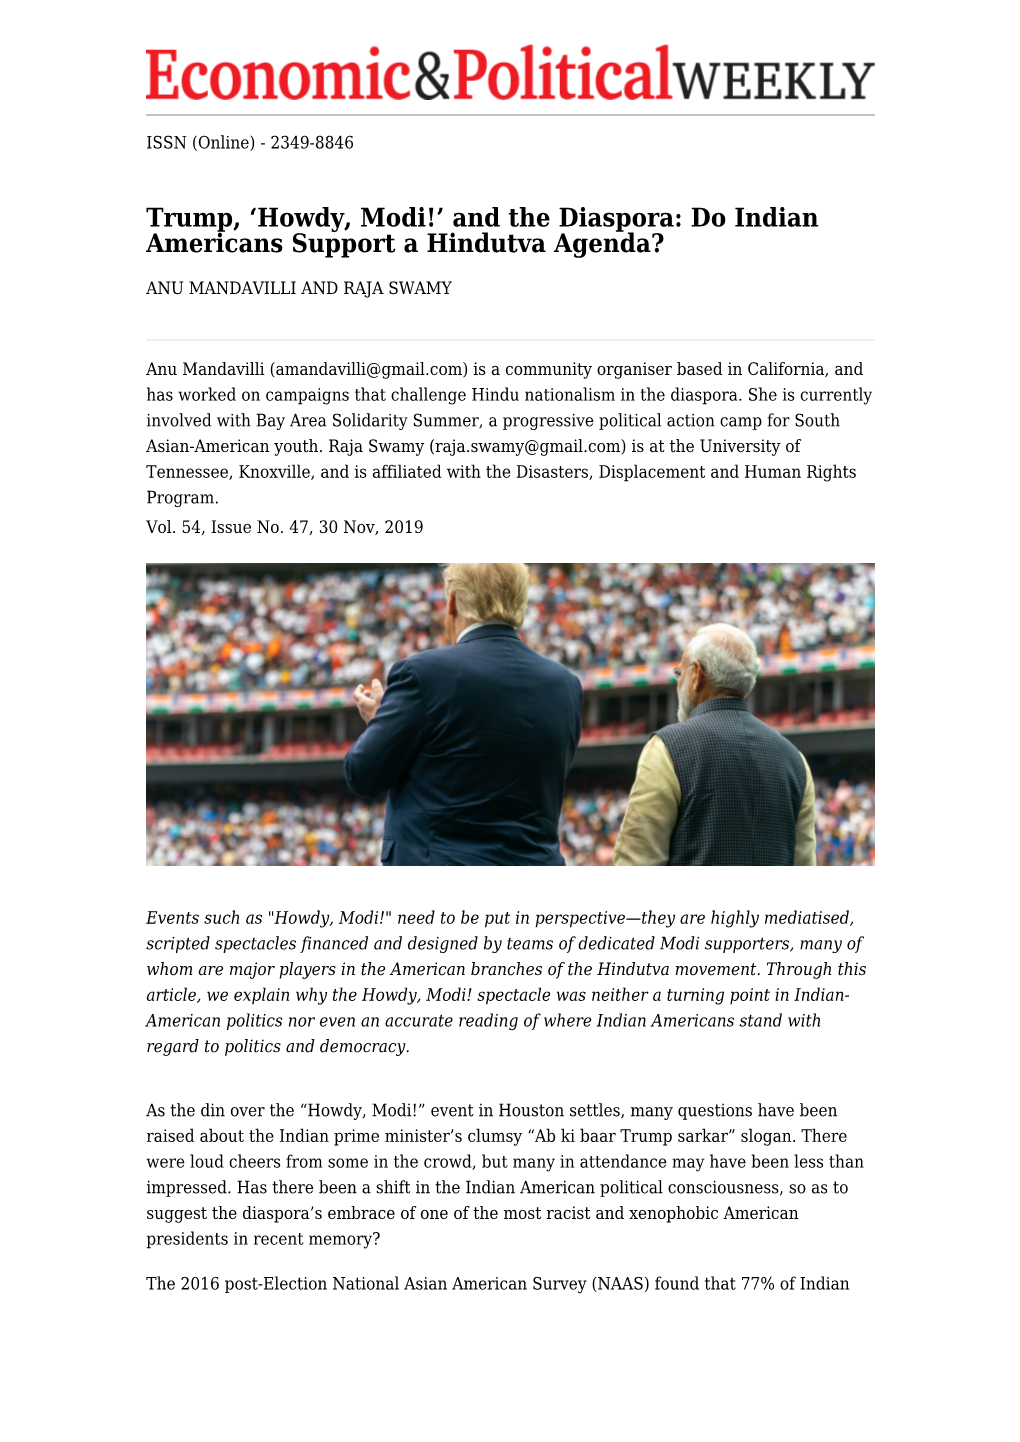 Trump, ‘Howdy, Modi!’ and the Diaspora: Do Indian Americans Support a Hindutva Agenda?